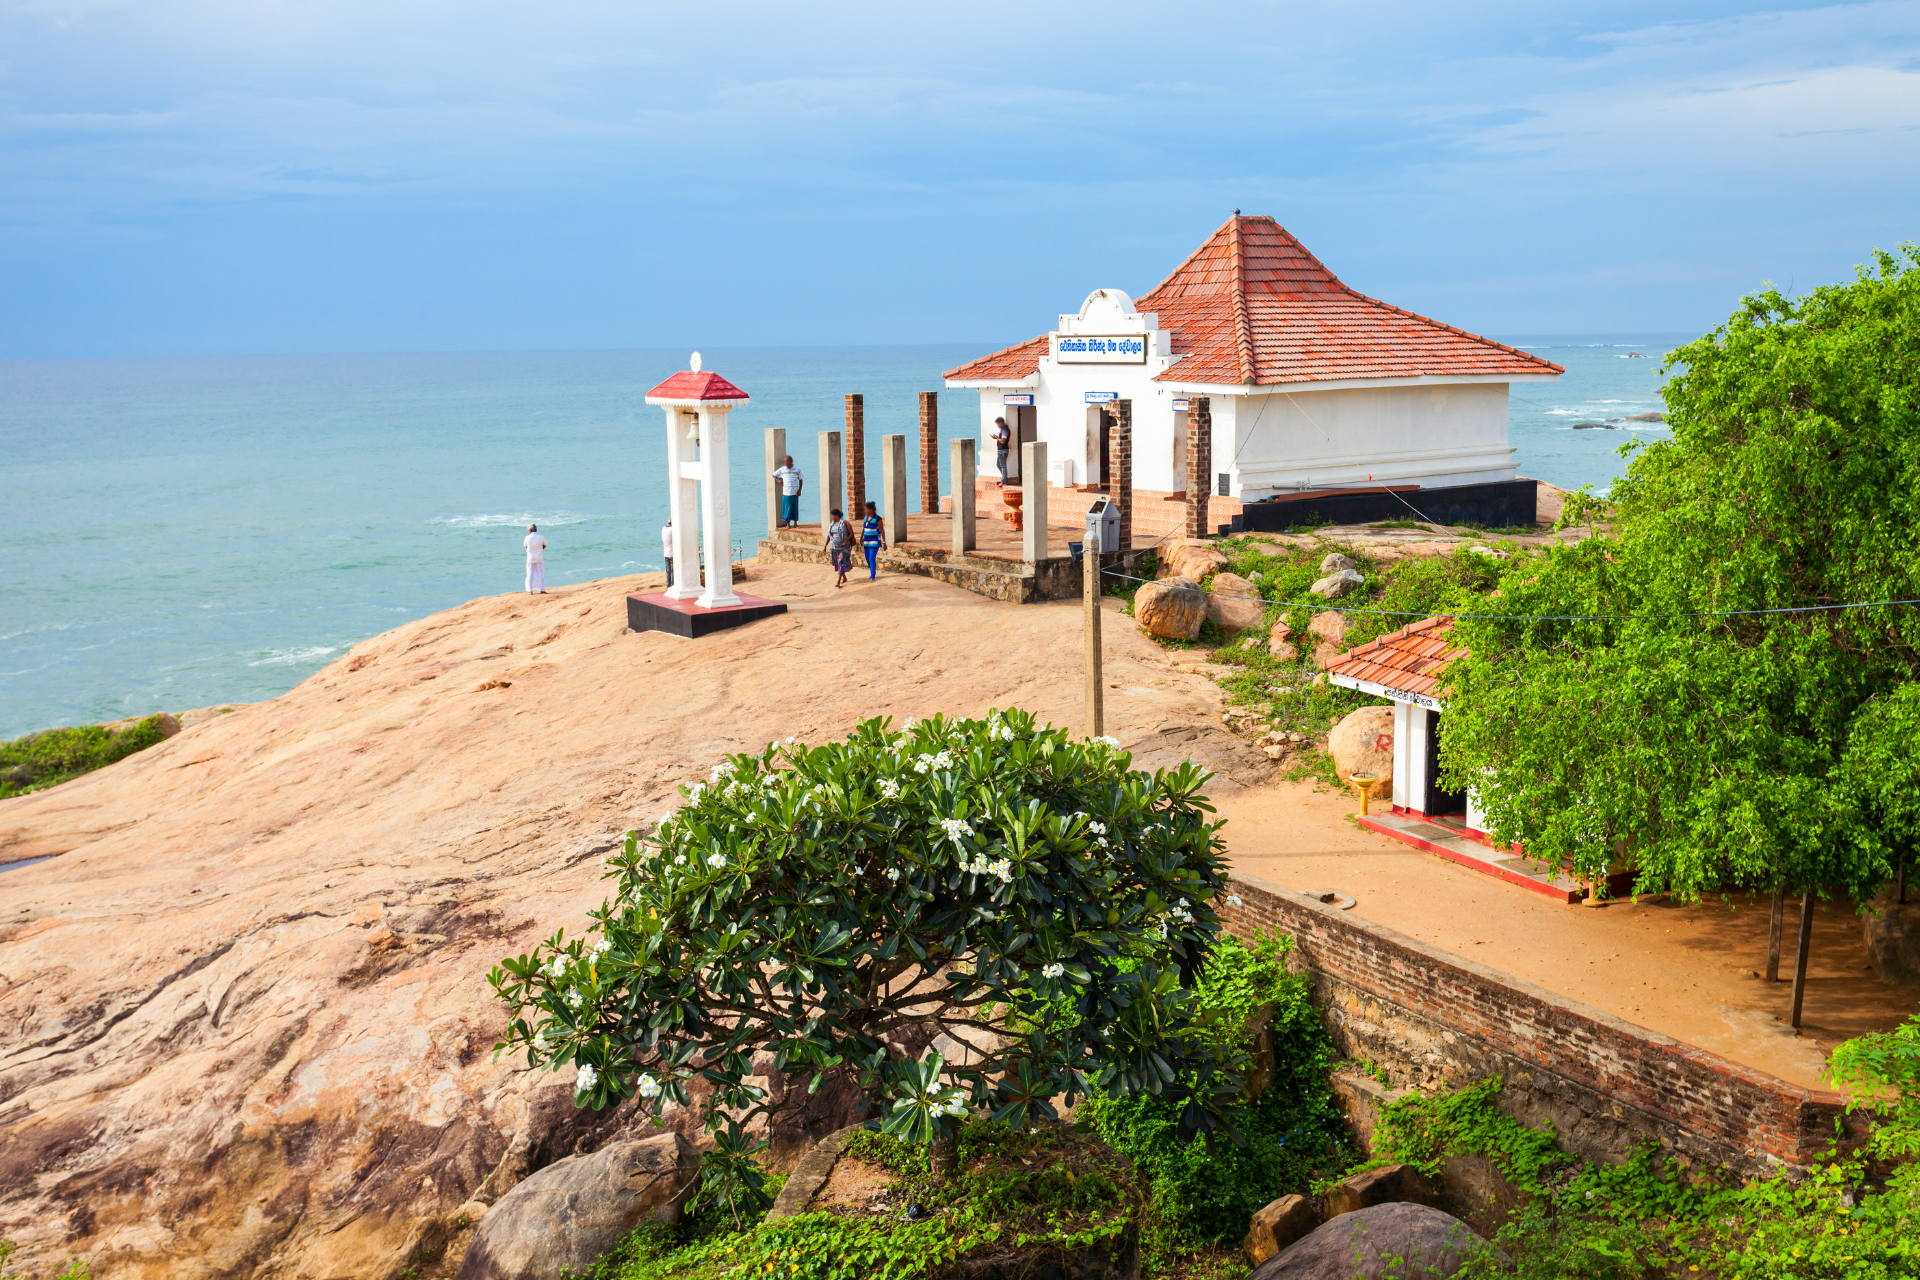 Kirinda Viharaya, a temple over looking Kirinda Beach in Sri Lanka